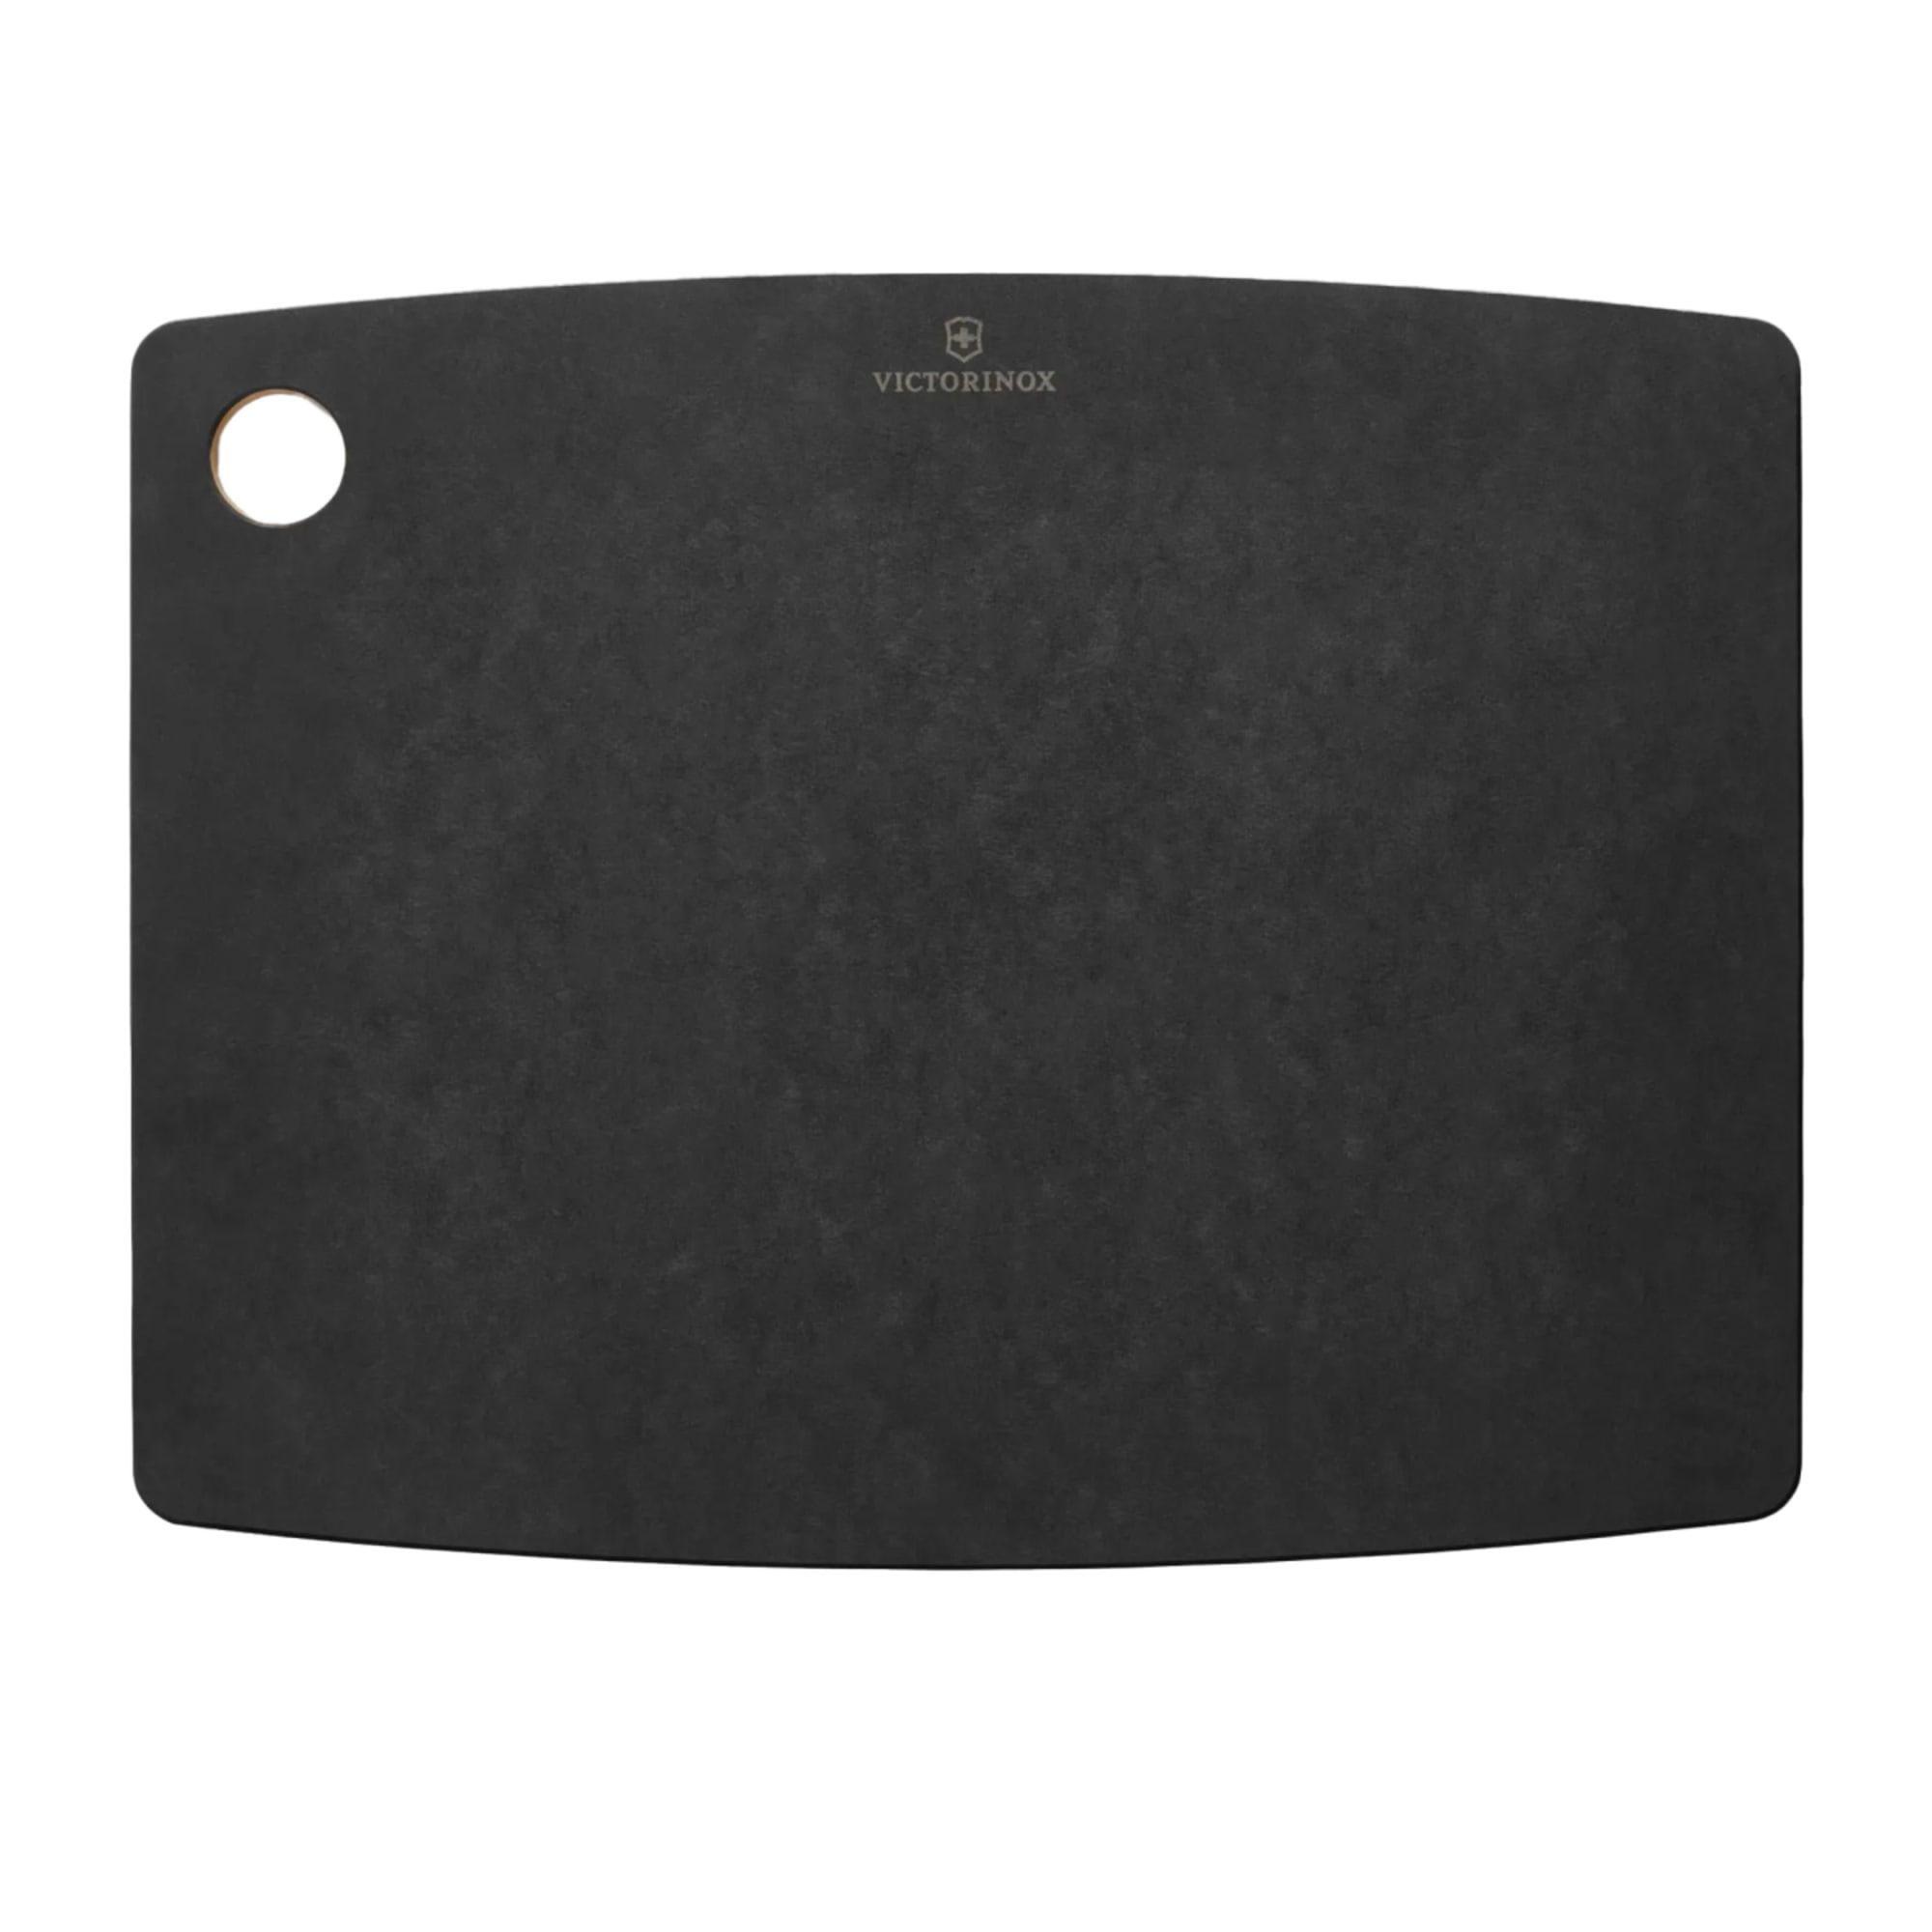 Victorinox Gourmet Series Cutting Board 36.8x28.5cm Black Image 3